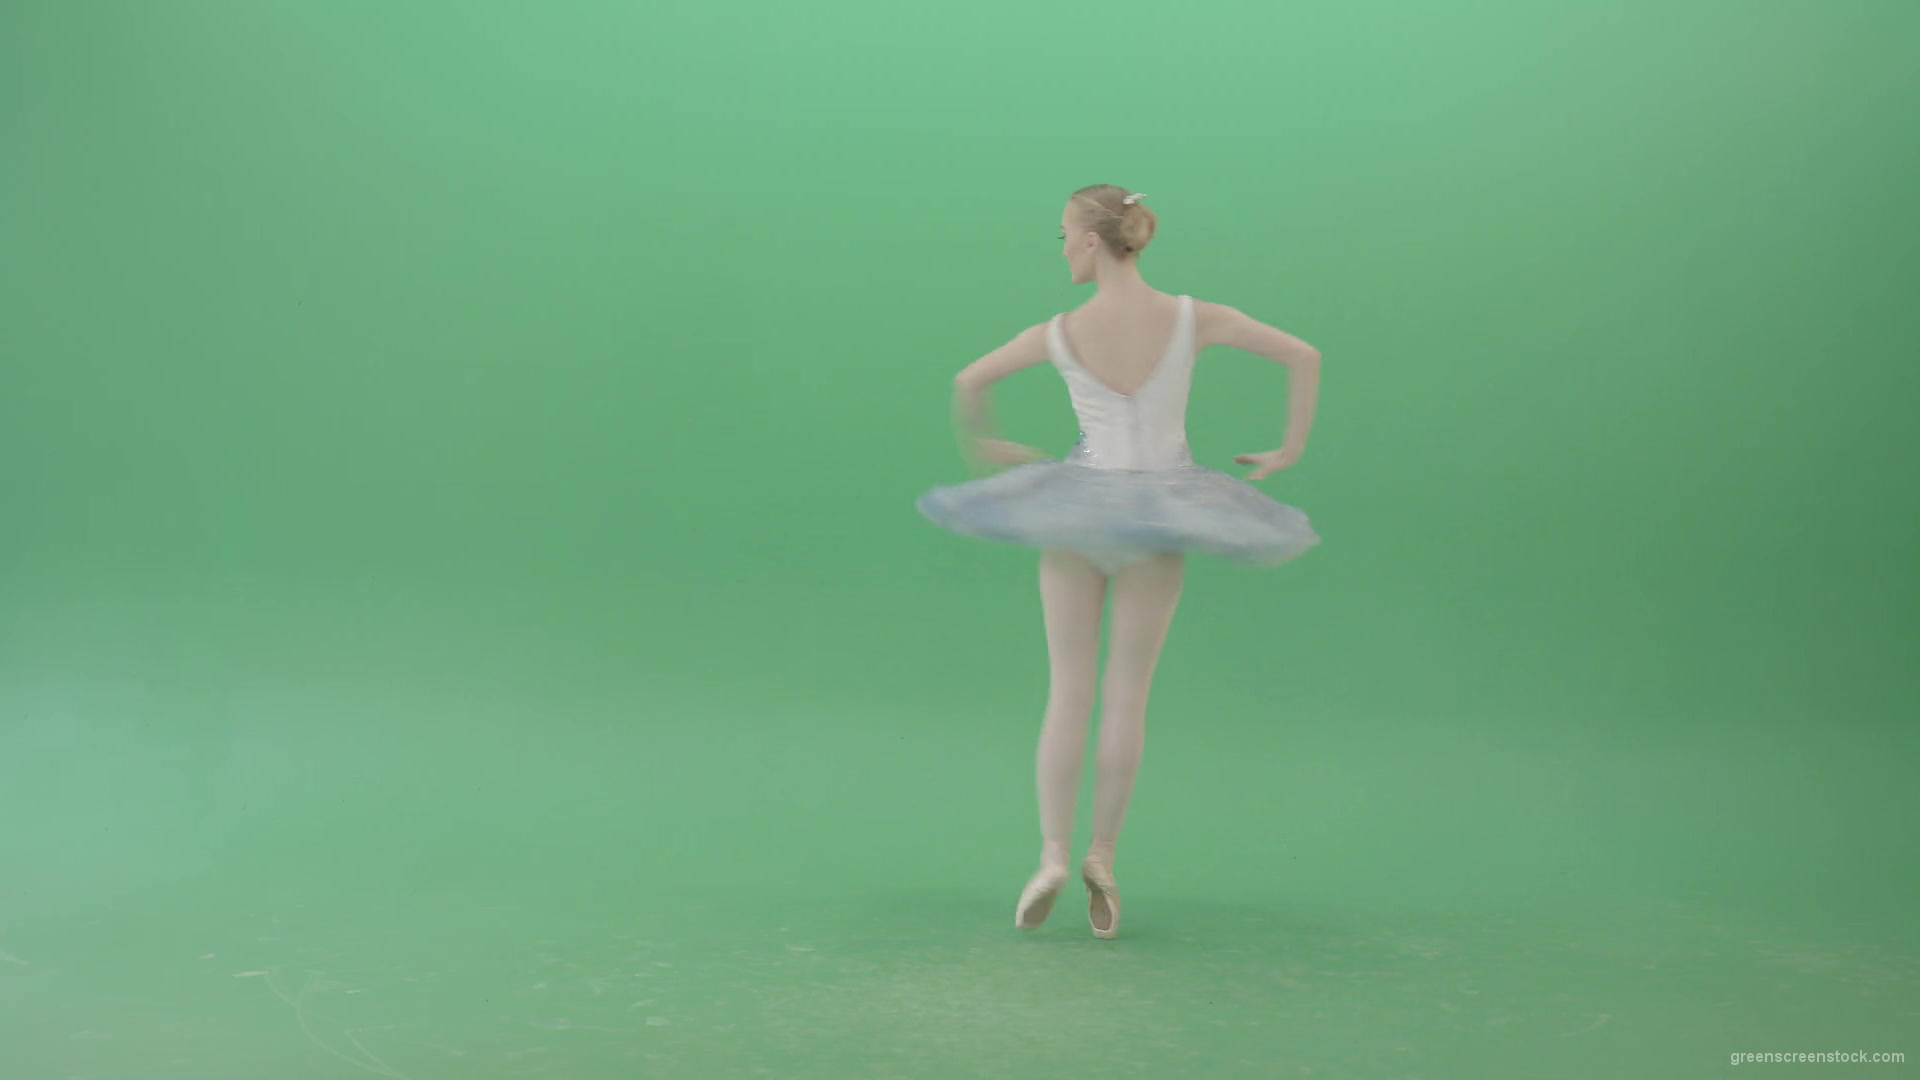 Happy-Ballerina-Ballet-Dancing-Girl-in-blue-dress-chilling-in-spin-on-green-screen-4K-Video-Footage-1920_004 Green Screen Stock